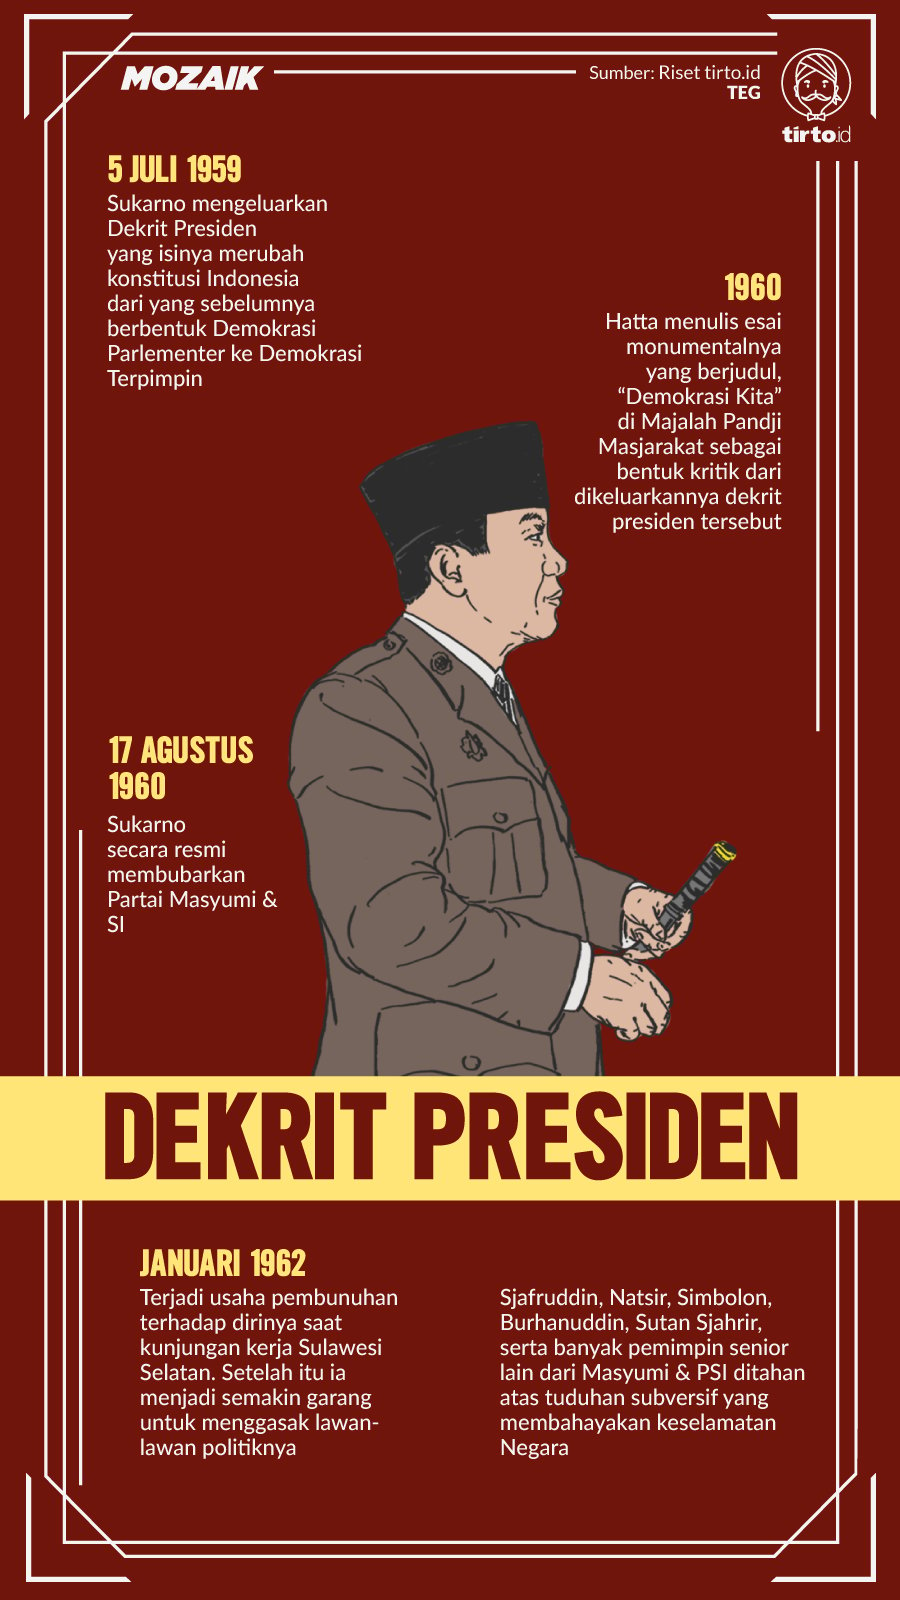 Infografik Mozaik Dekrit Presiden 5 Juli 1959